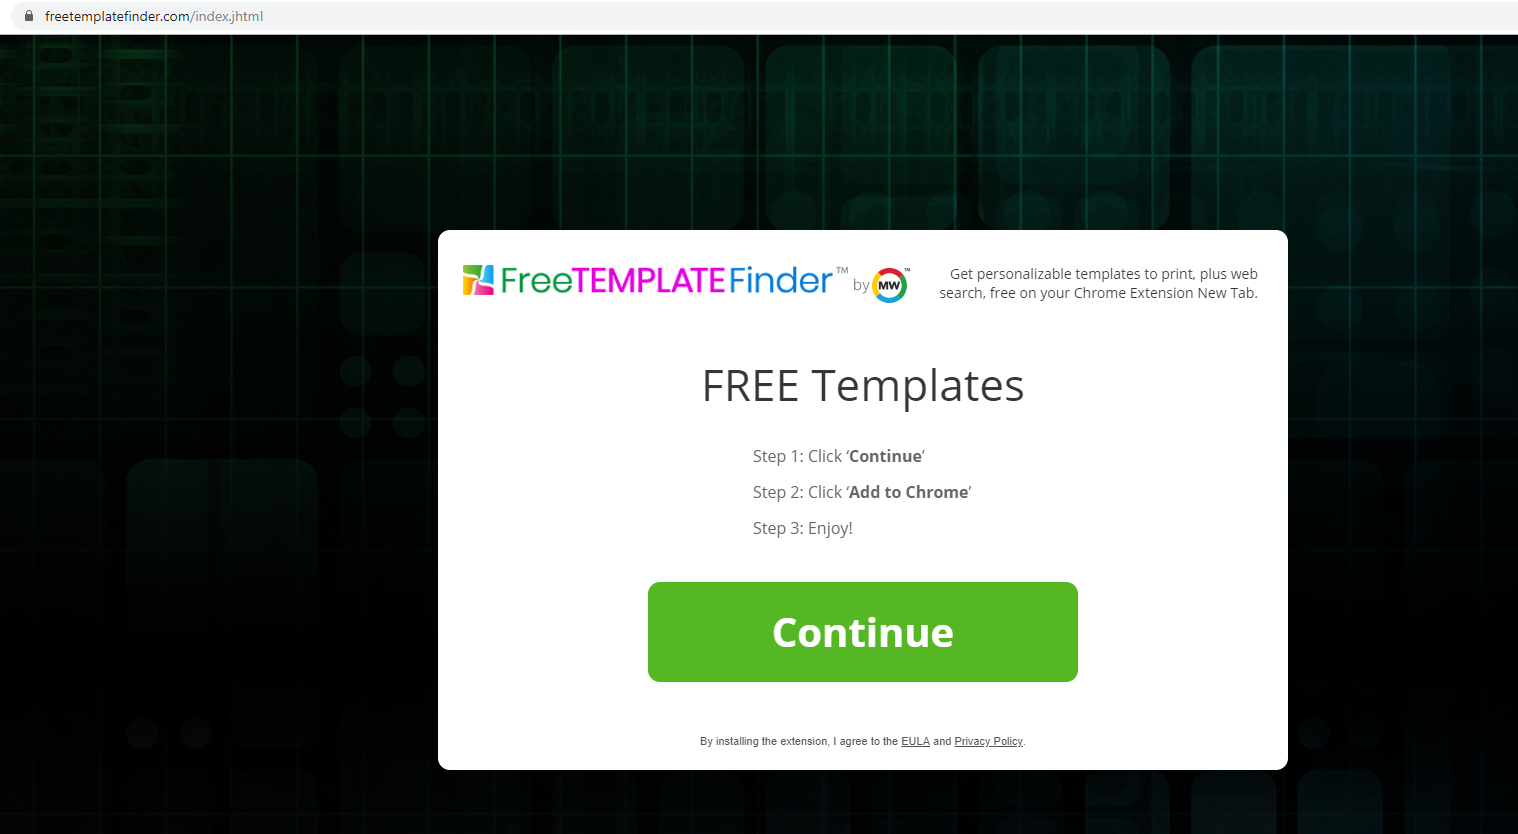 FreeTemplateFinder Toolbar